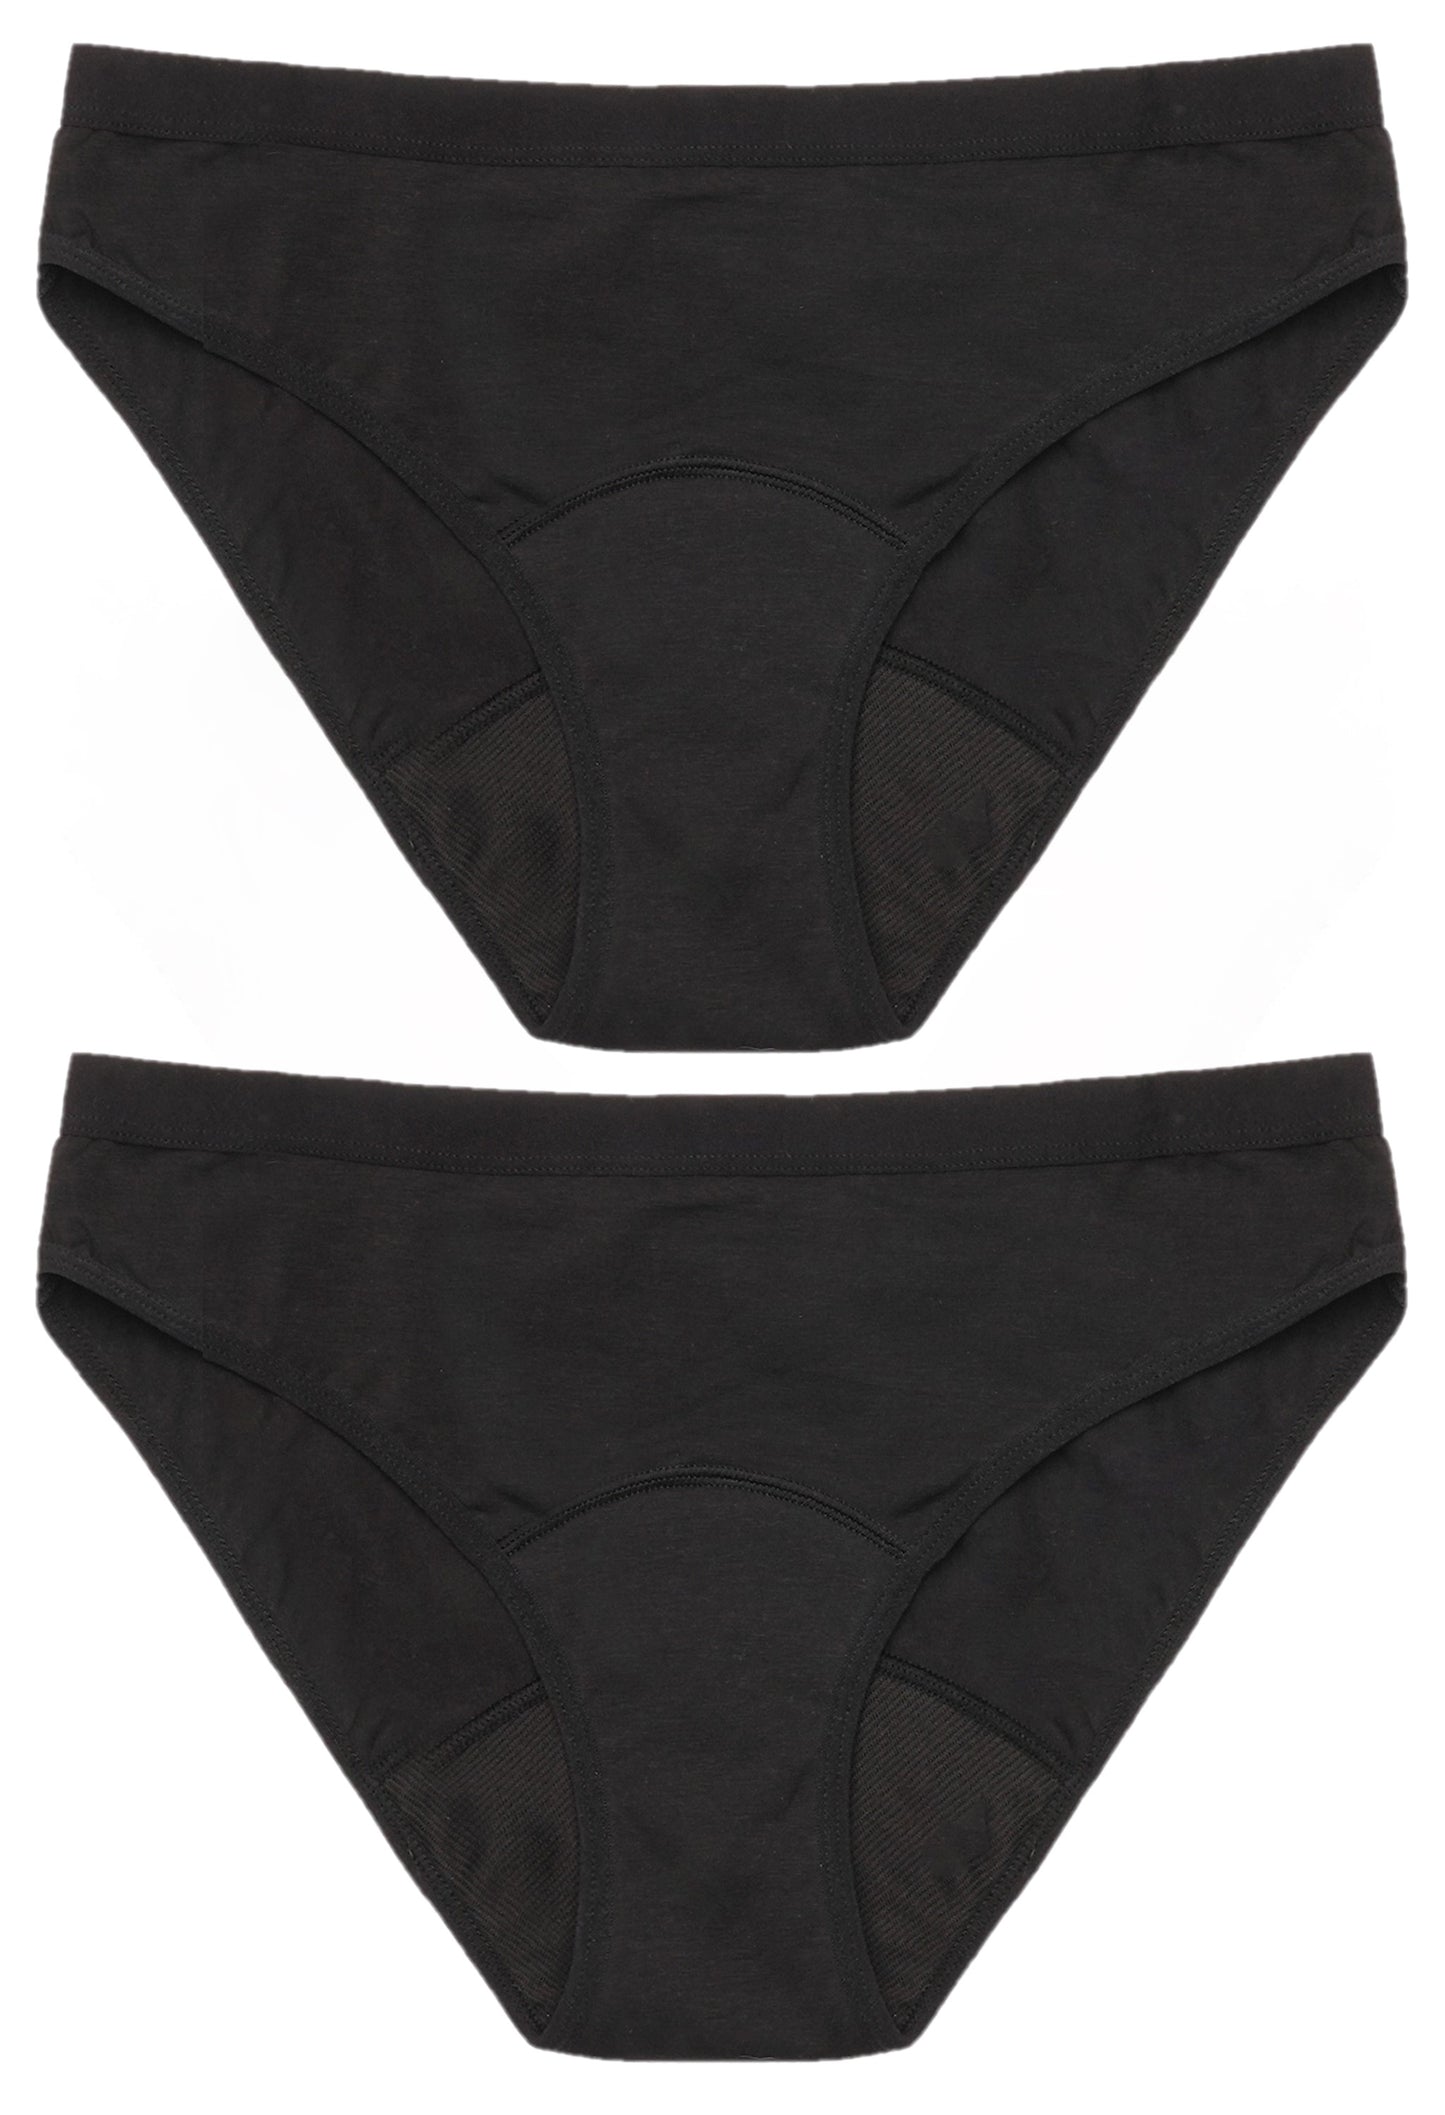 2 Pack Ladies Black Period Briefs Teenage Girls Cotton High Leg Protective Underwear Knickers